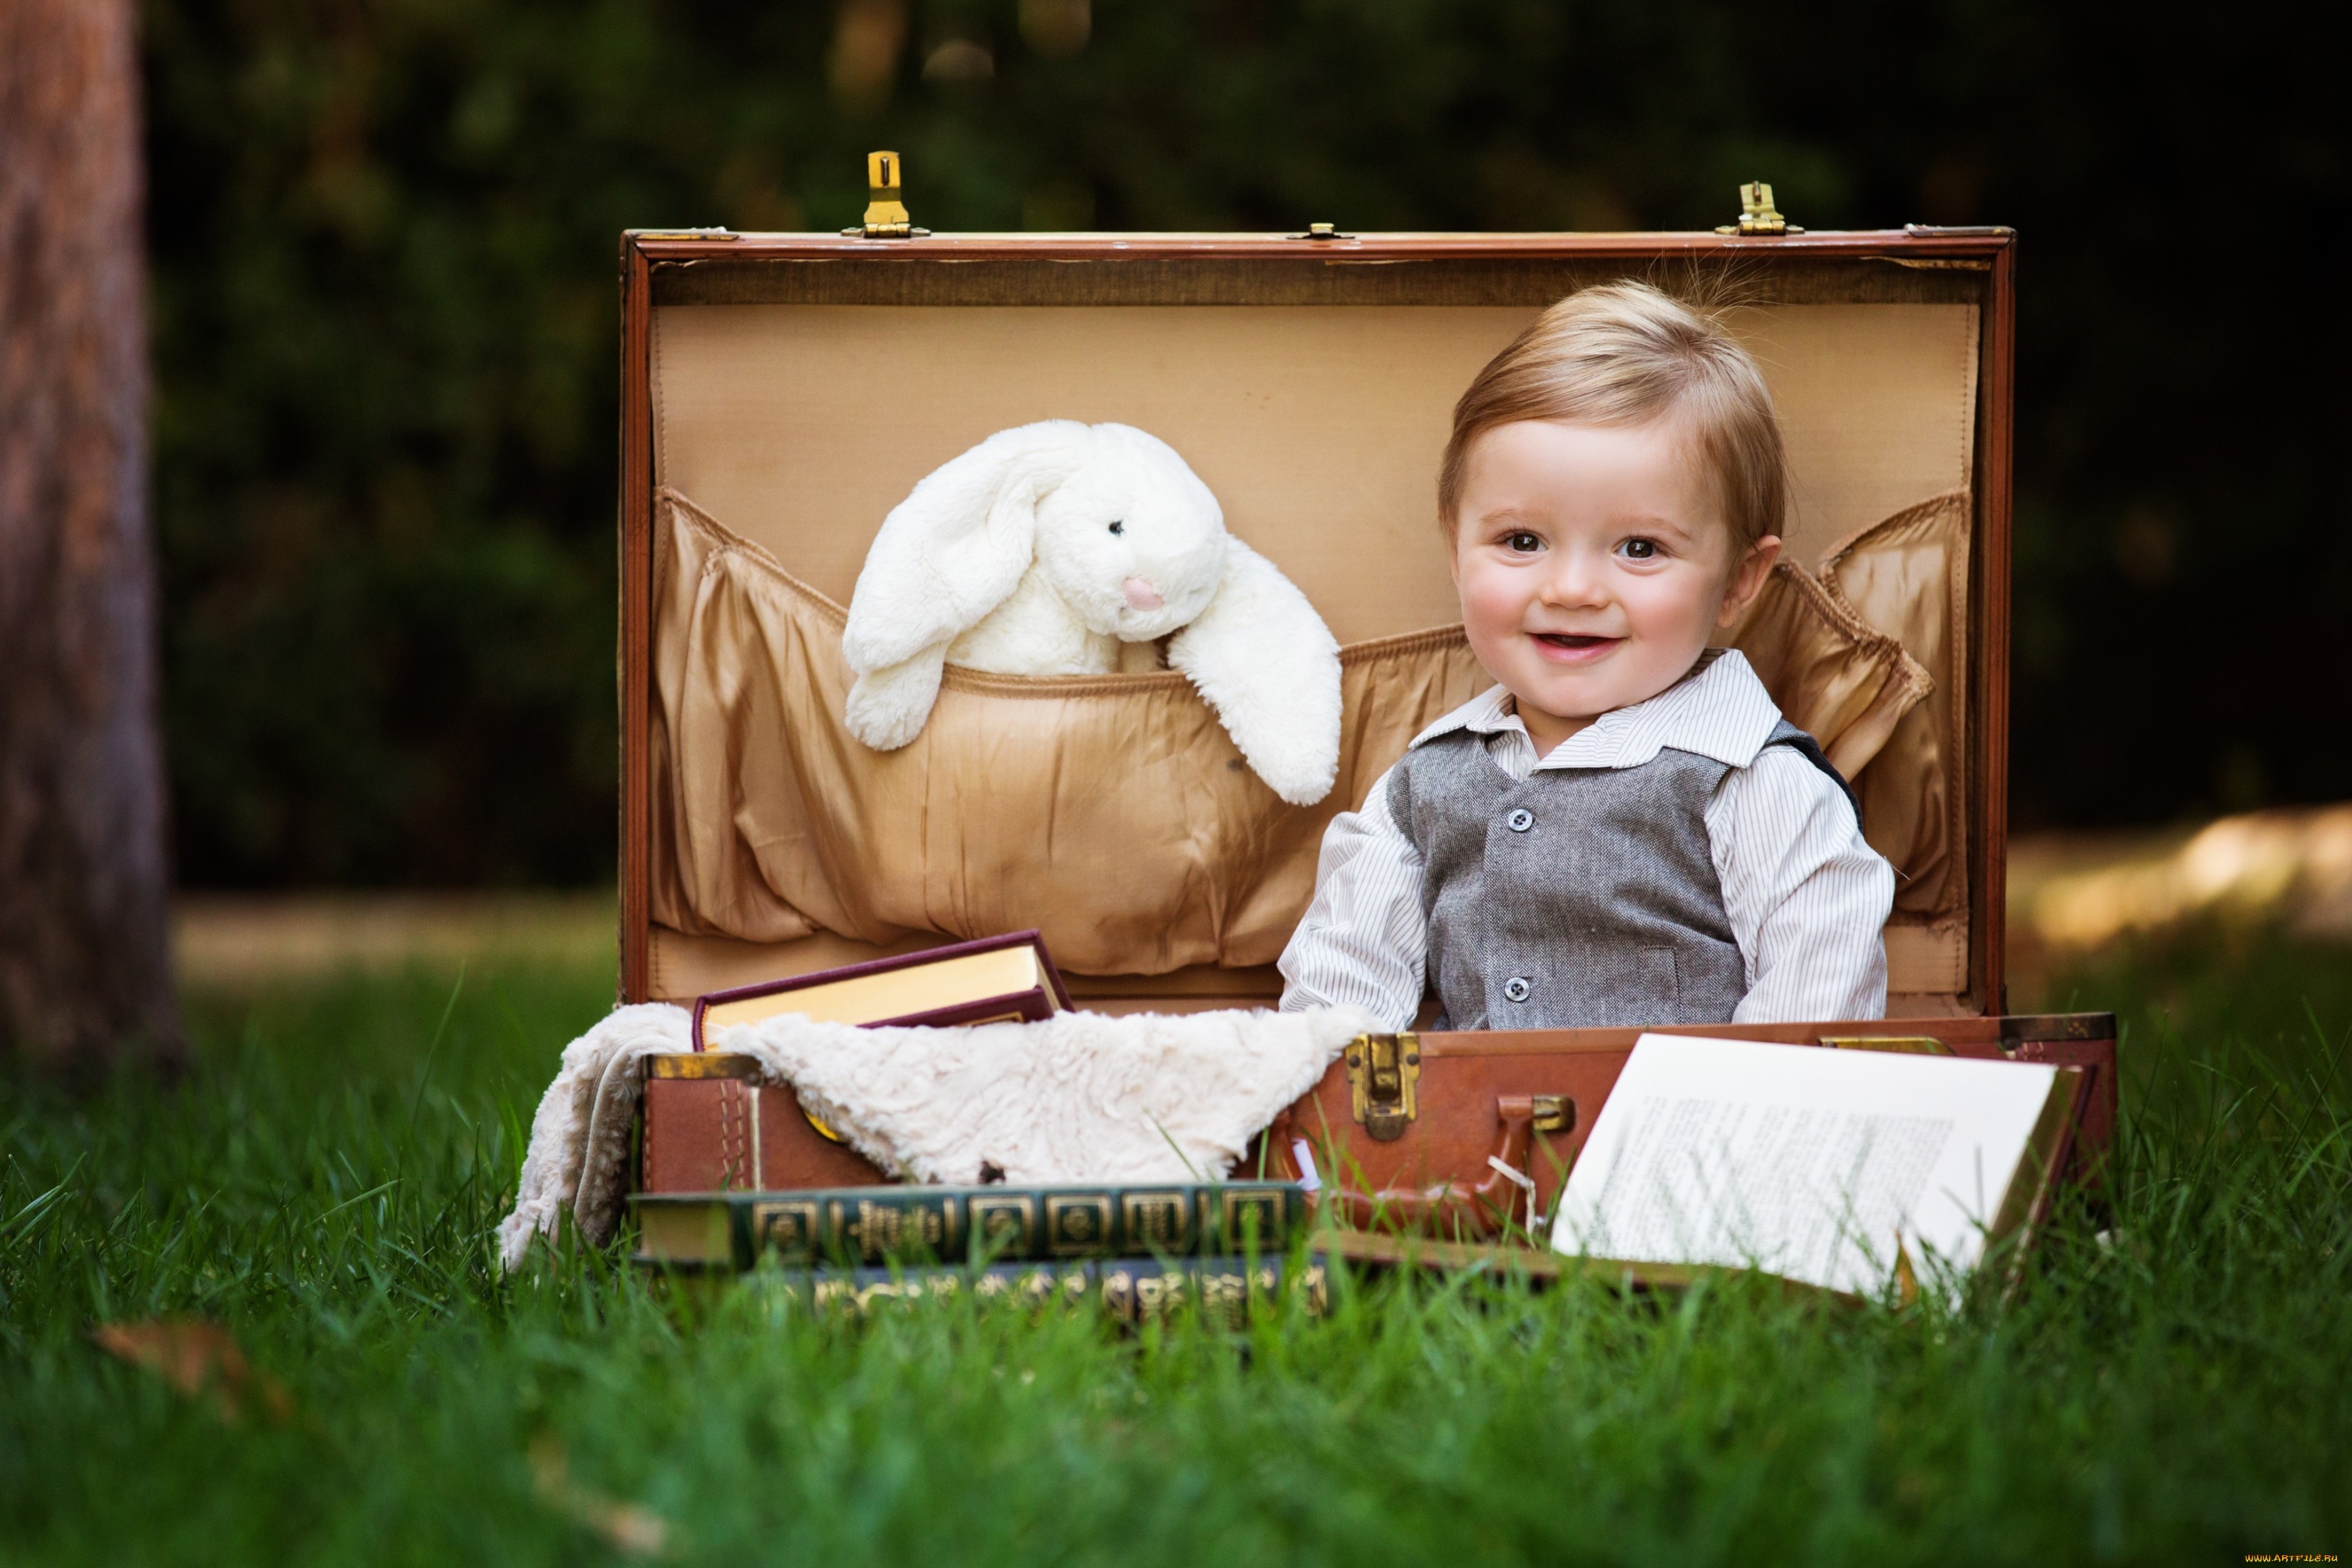 photography, child, grass, little boy, stuffed animal, suitcase Full HD